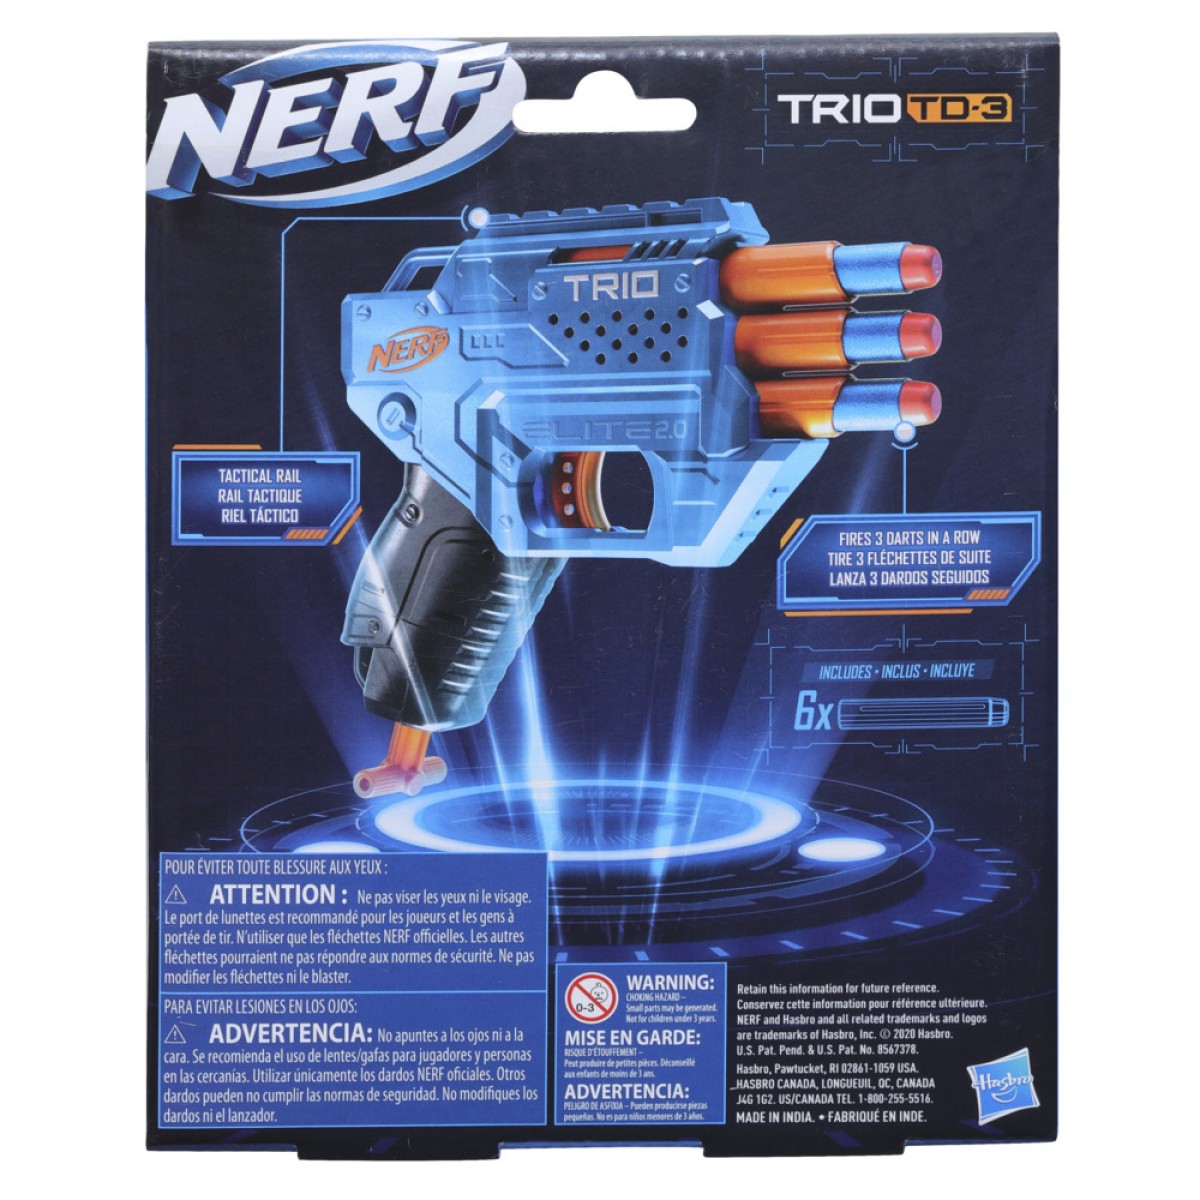 Nerf Elite 2.0 Trio Td-3 Blaster, 6 Nerf Elite Darts, 3-Barrel Blasting, Tactical Rail, 8 Yrs+